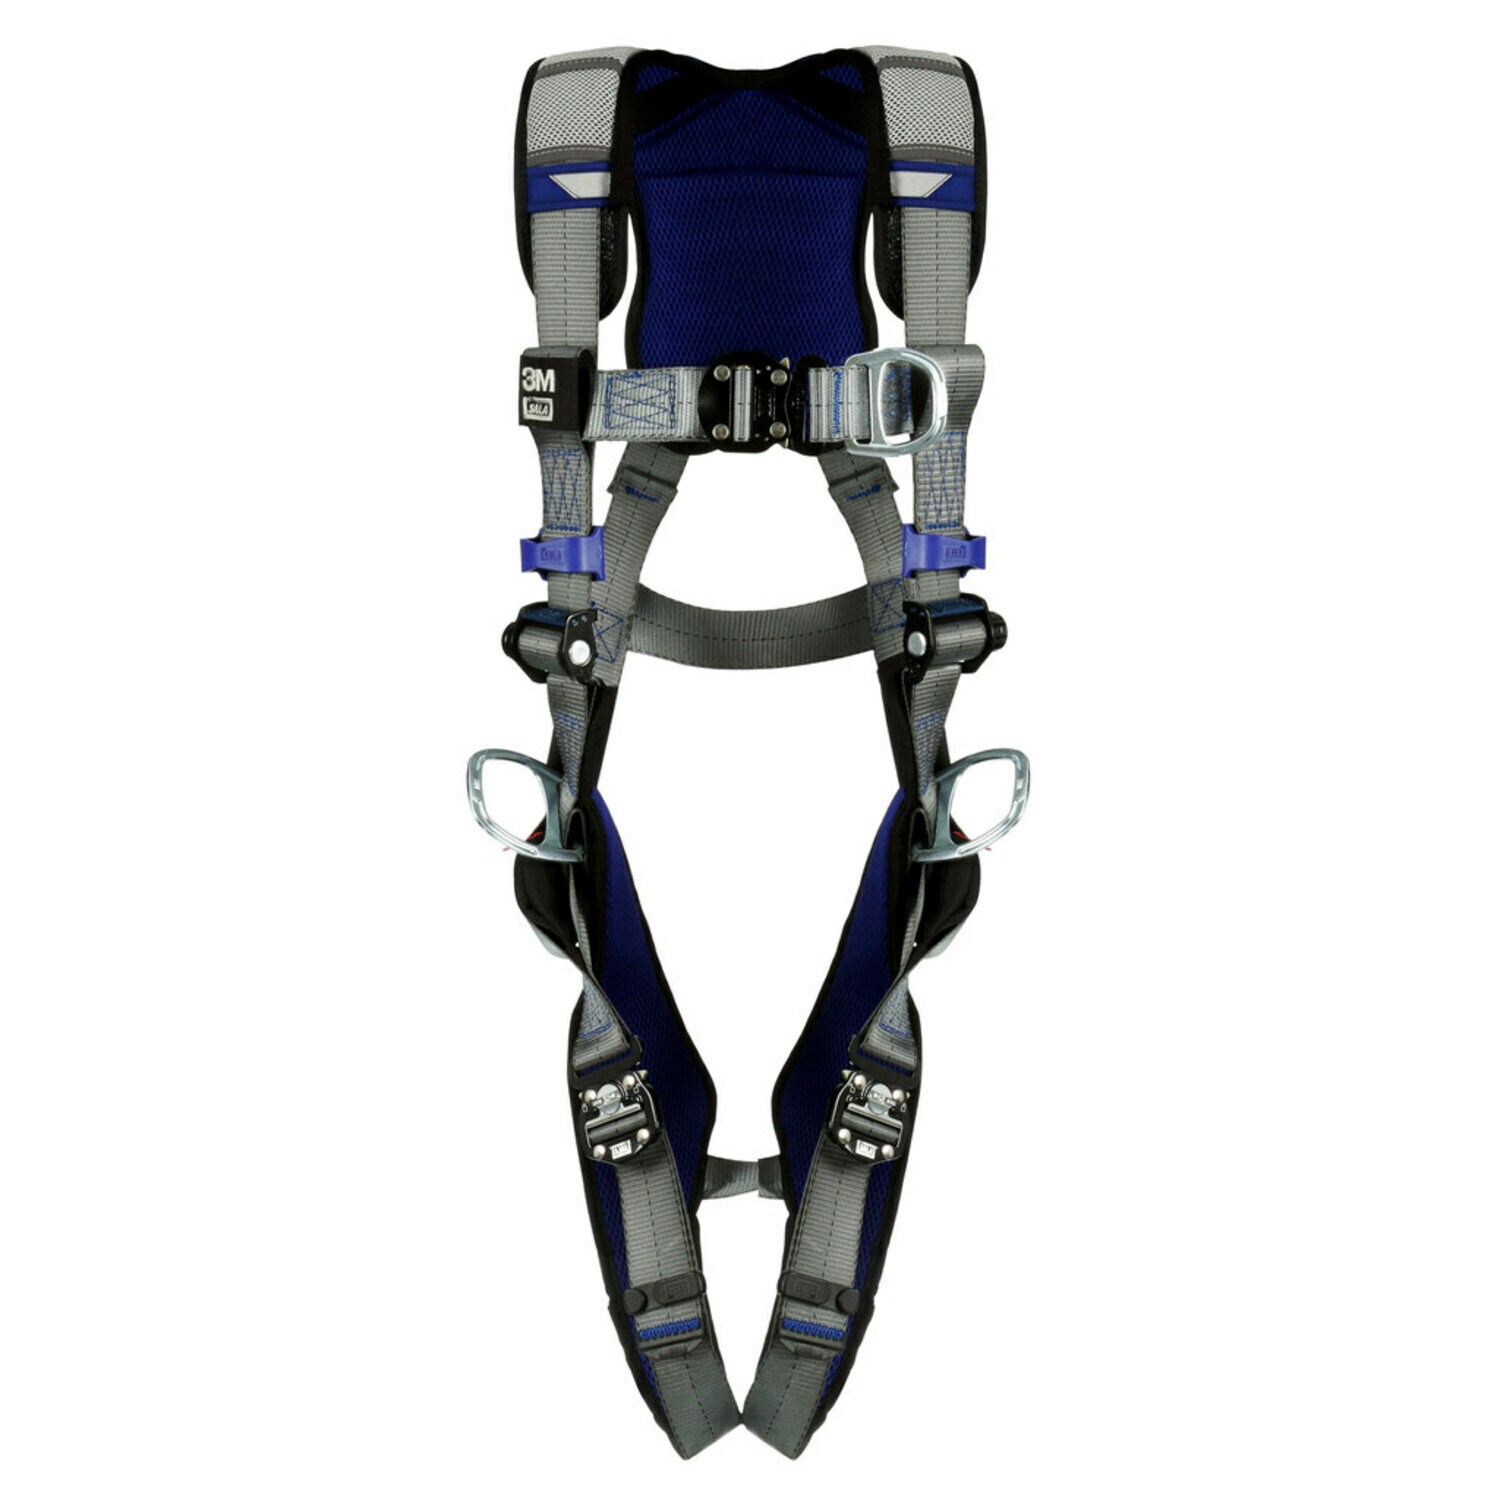 7012817787 - 3M DBI-SALA ExoFit X200 Comfort Vest Climbing/Positioning Safety Harness 1402052, Large